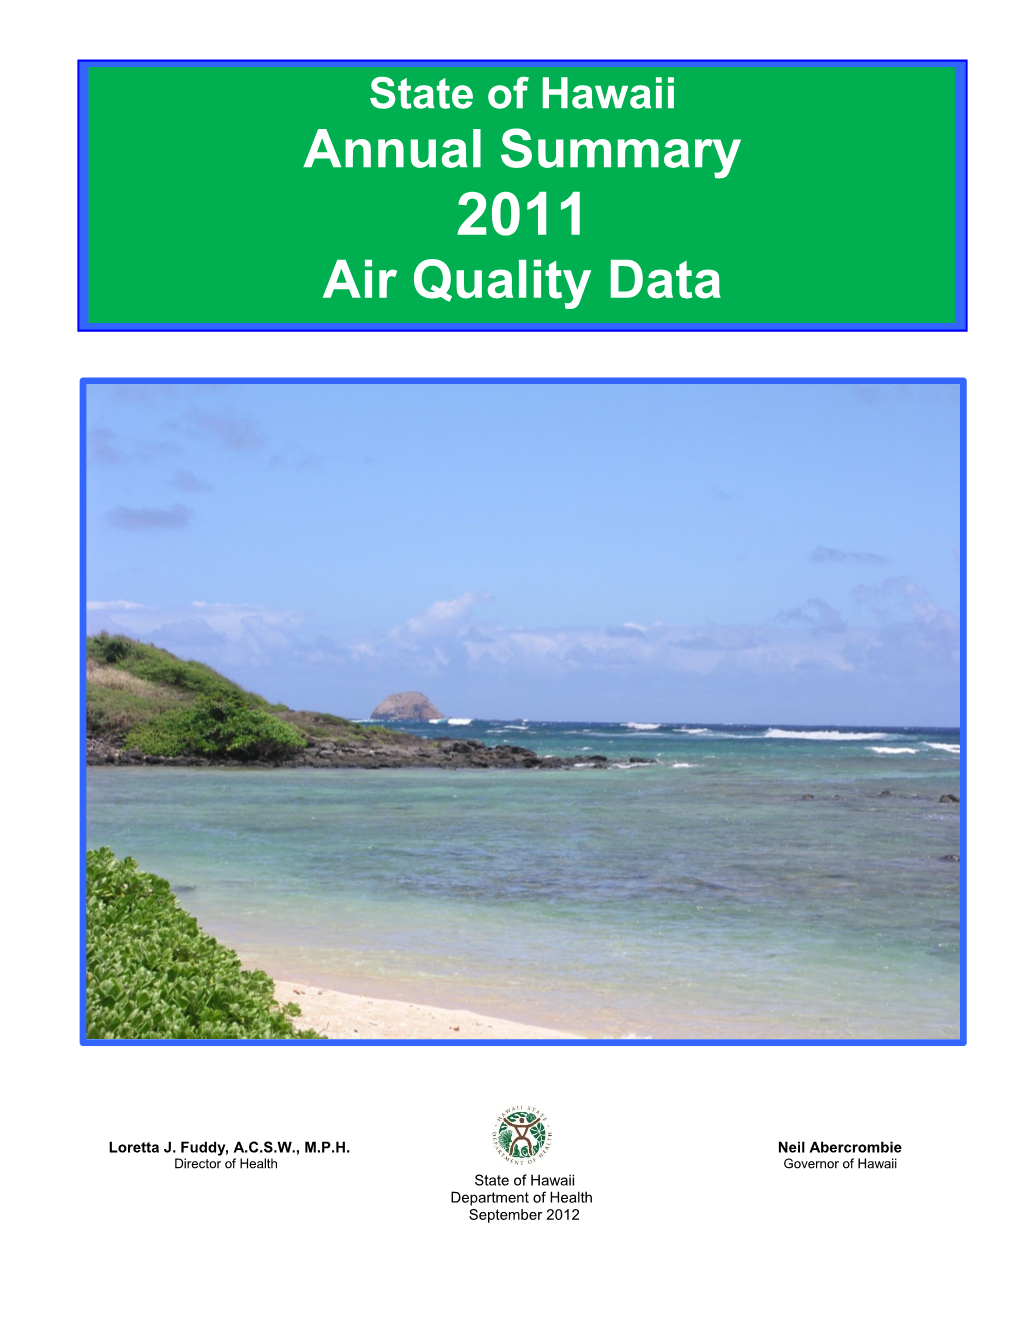 Annual Summary of the 2011 Hawaii Air Quality Data